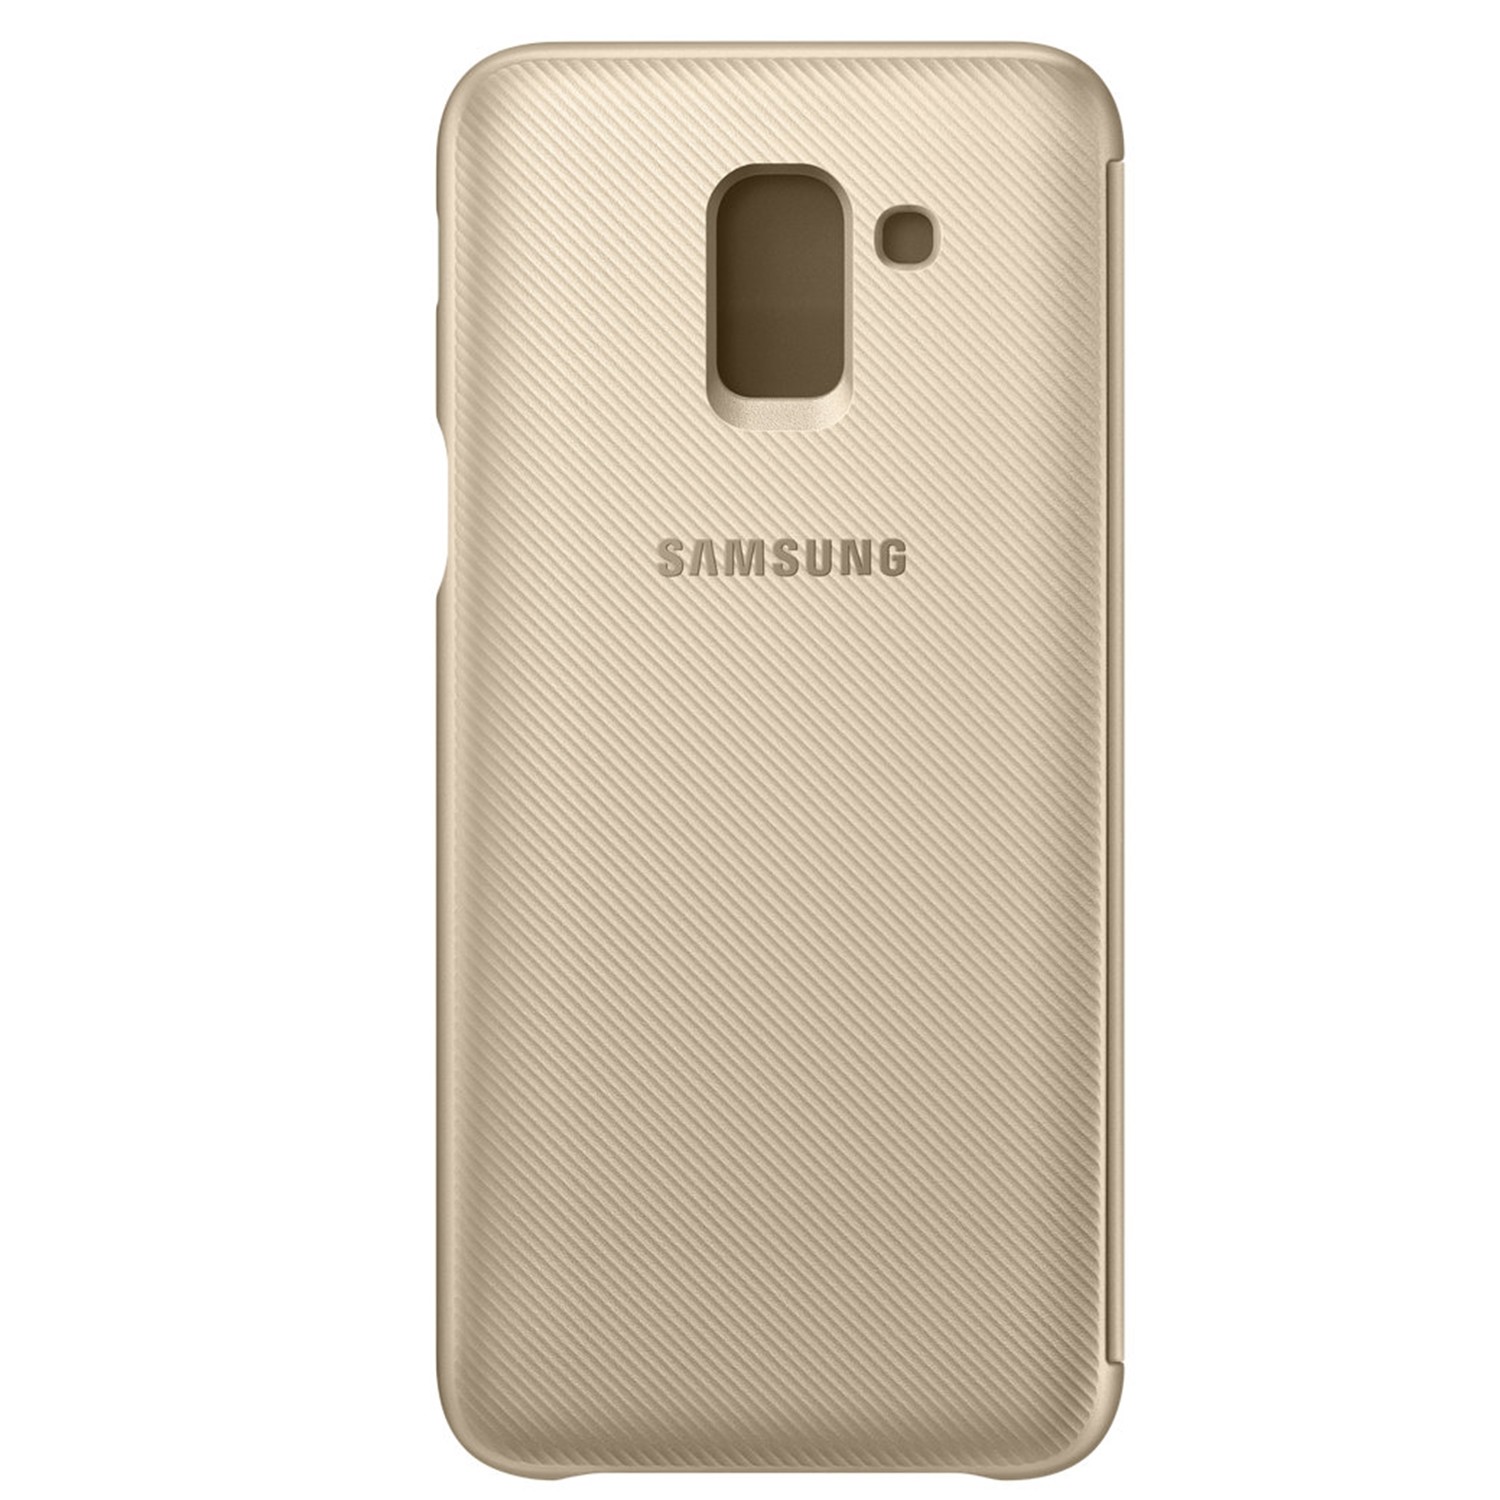 Husa Book Samsung pentru Samsung Galaxy J6 2018 EF-WJ600CFEGWW Gold thumb